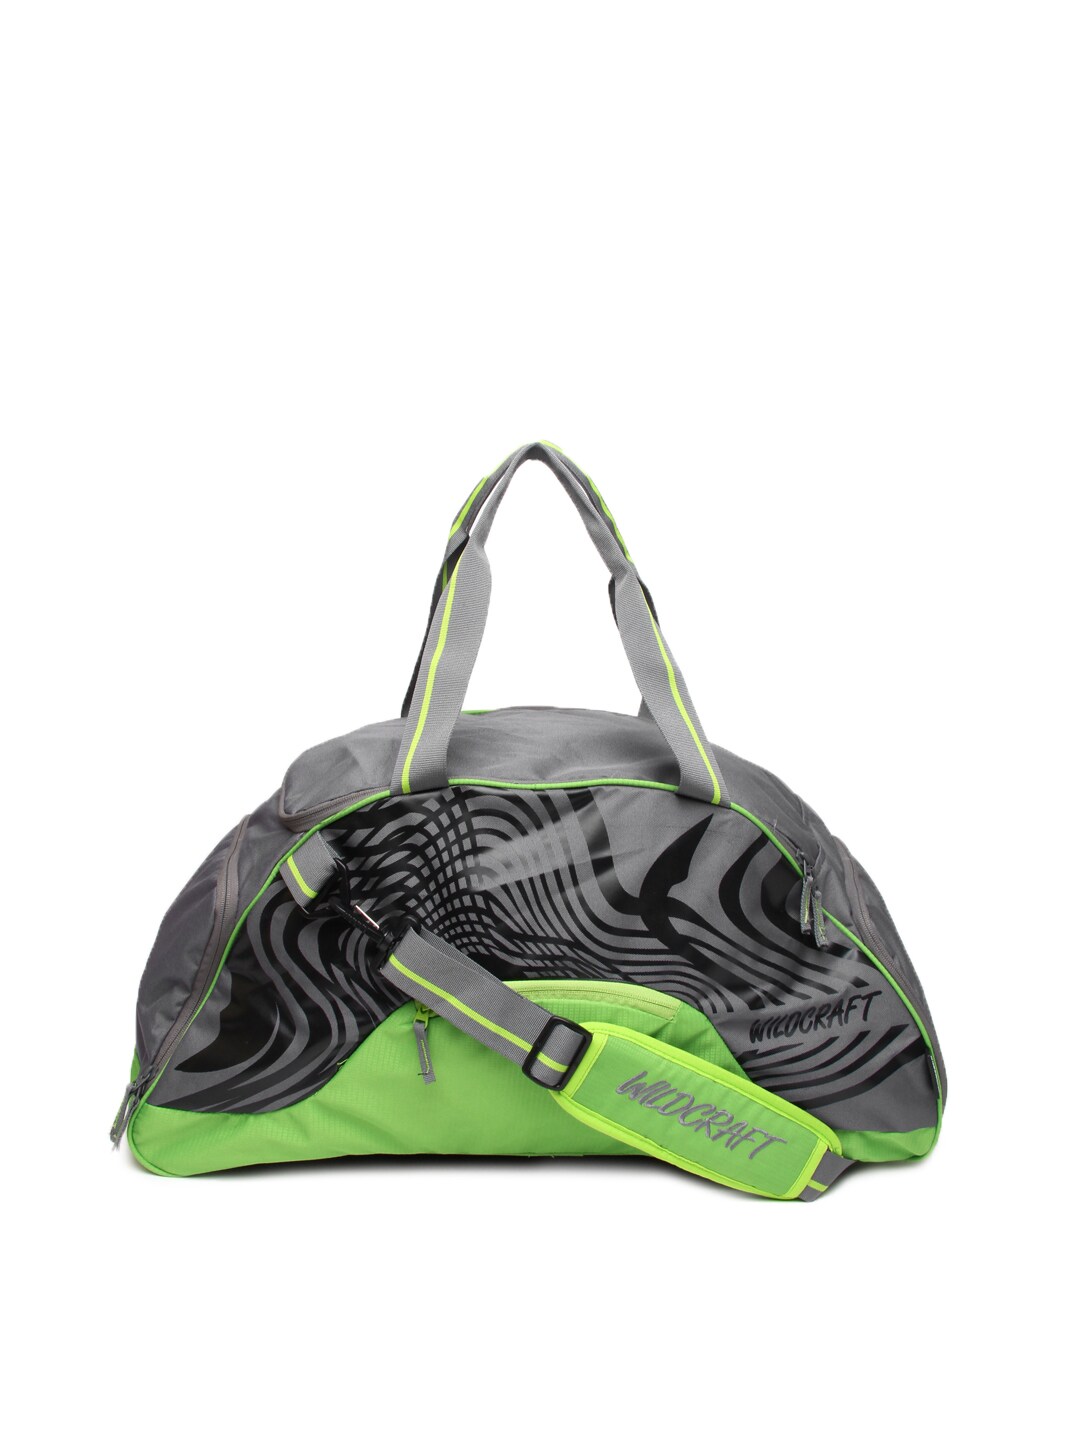 Wildcraft Unisex Green & Grey Duffel Bag